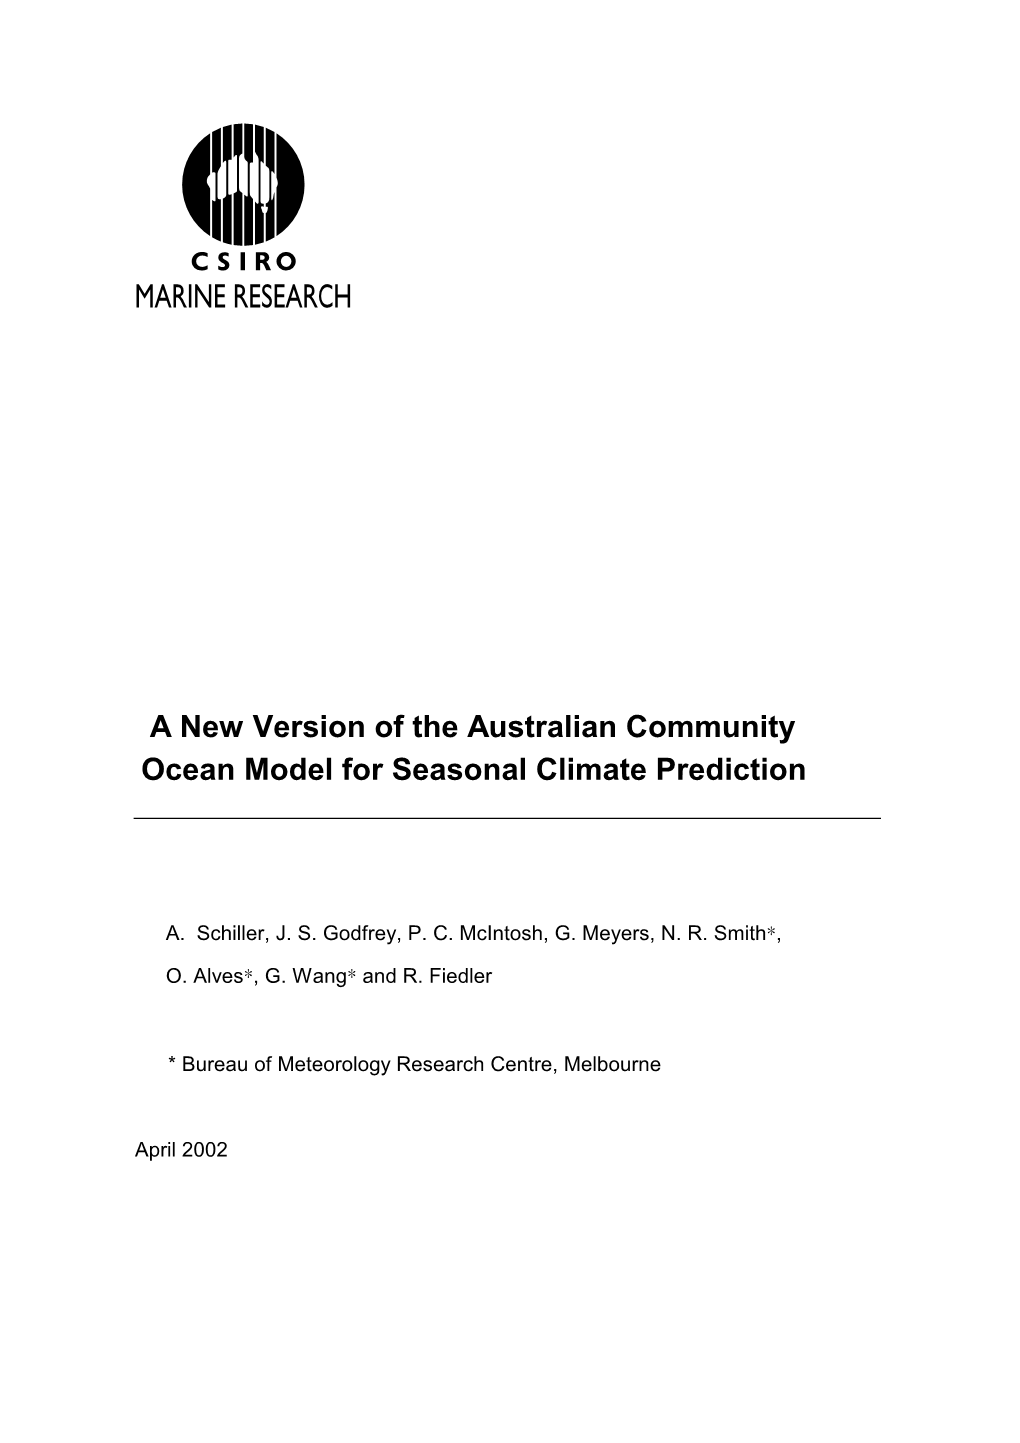 A New Version of the Australian Community Ocean Model for Seasonal Climate Prediction